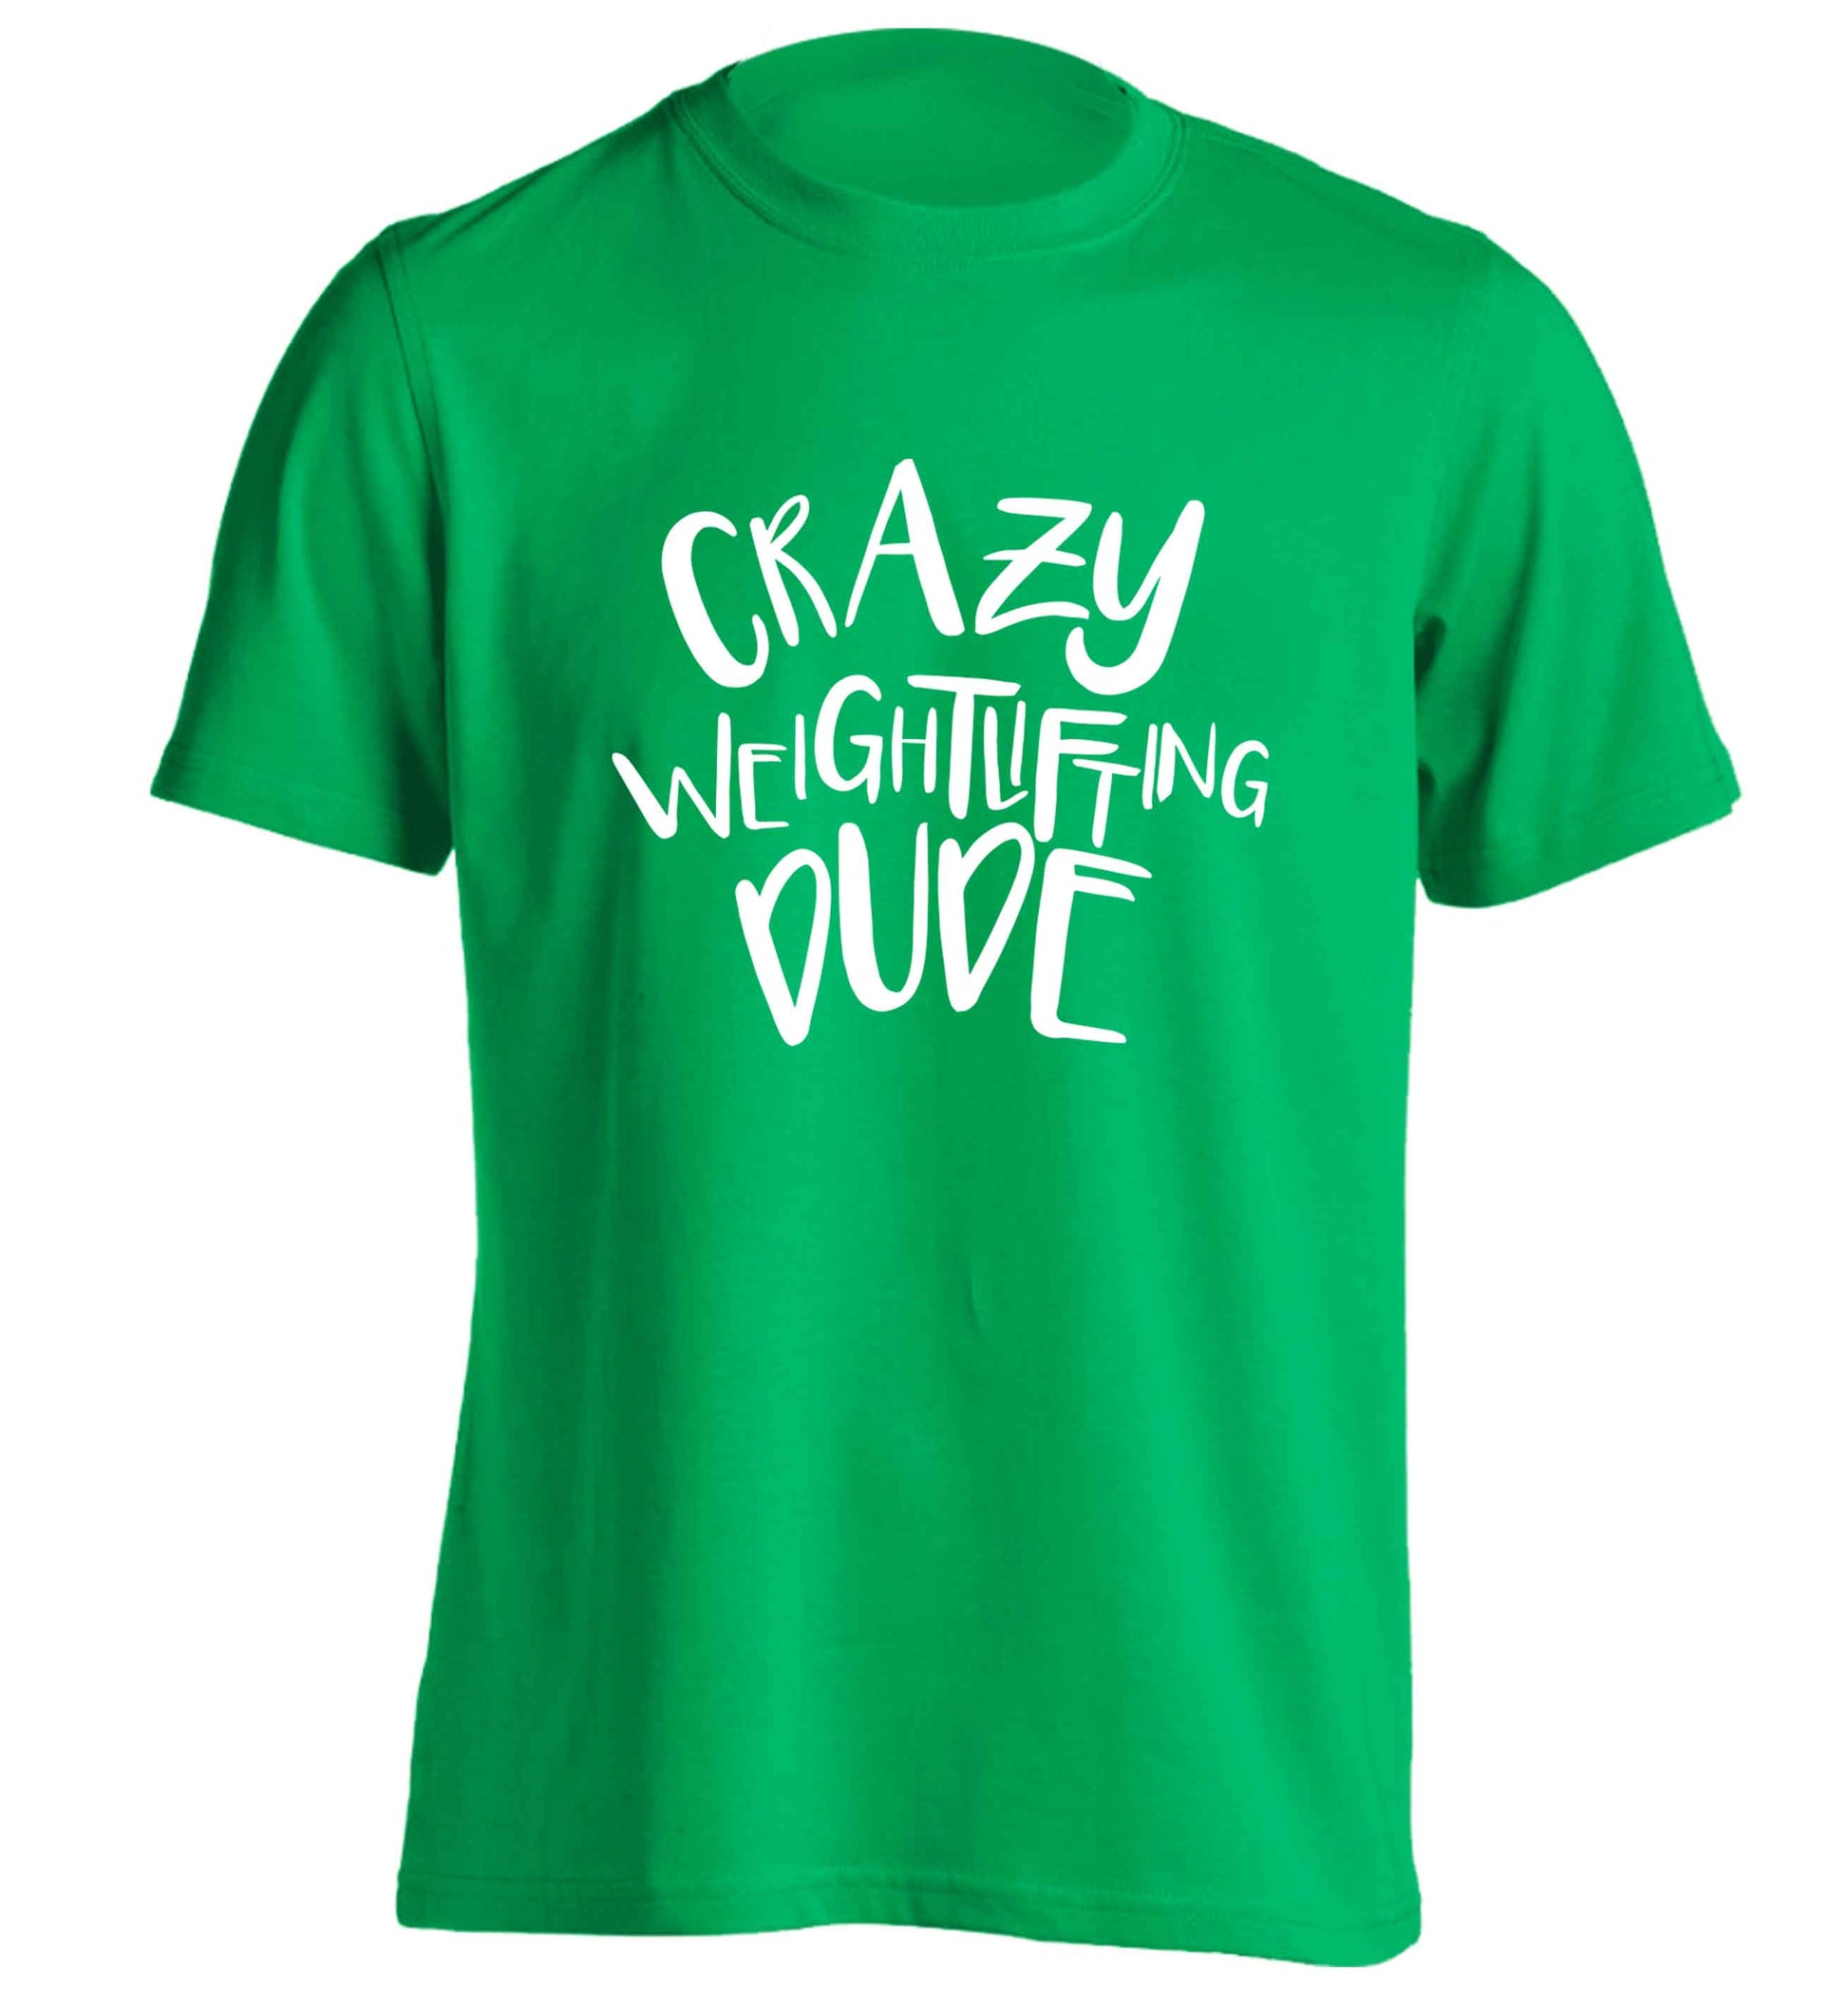 Crazy weightlifting dude adults unisex green Tshirt 2XL